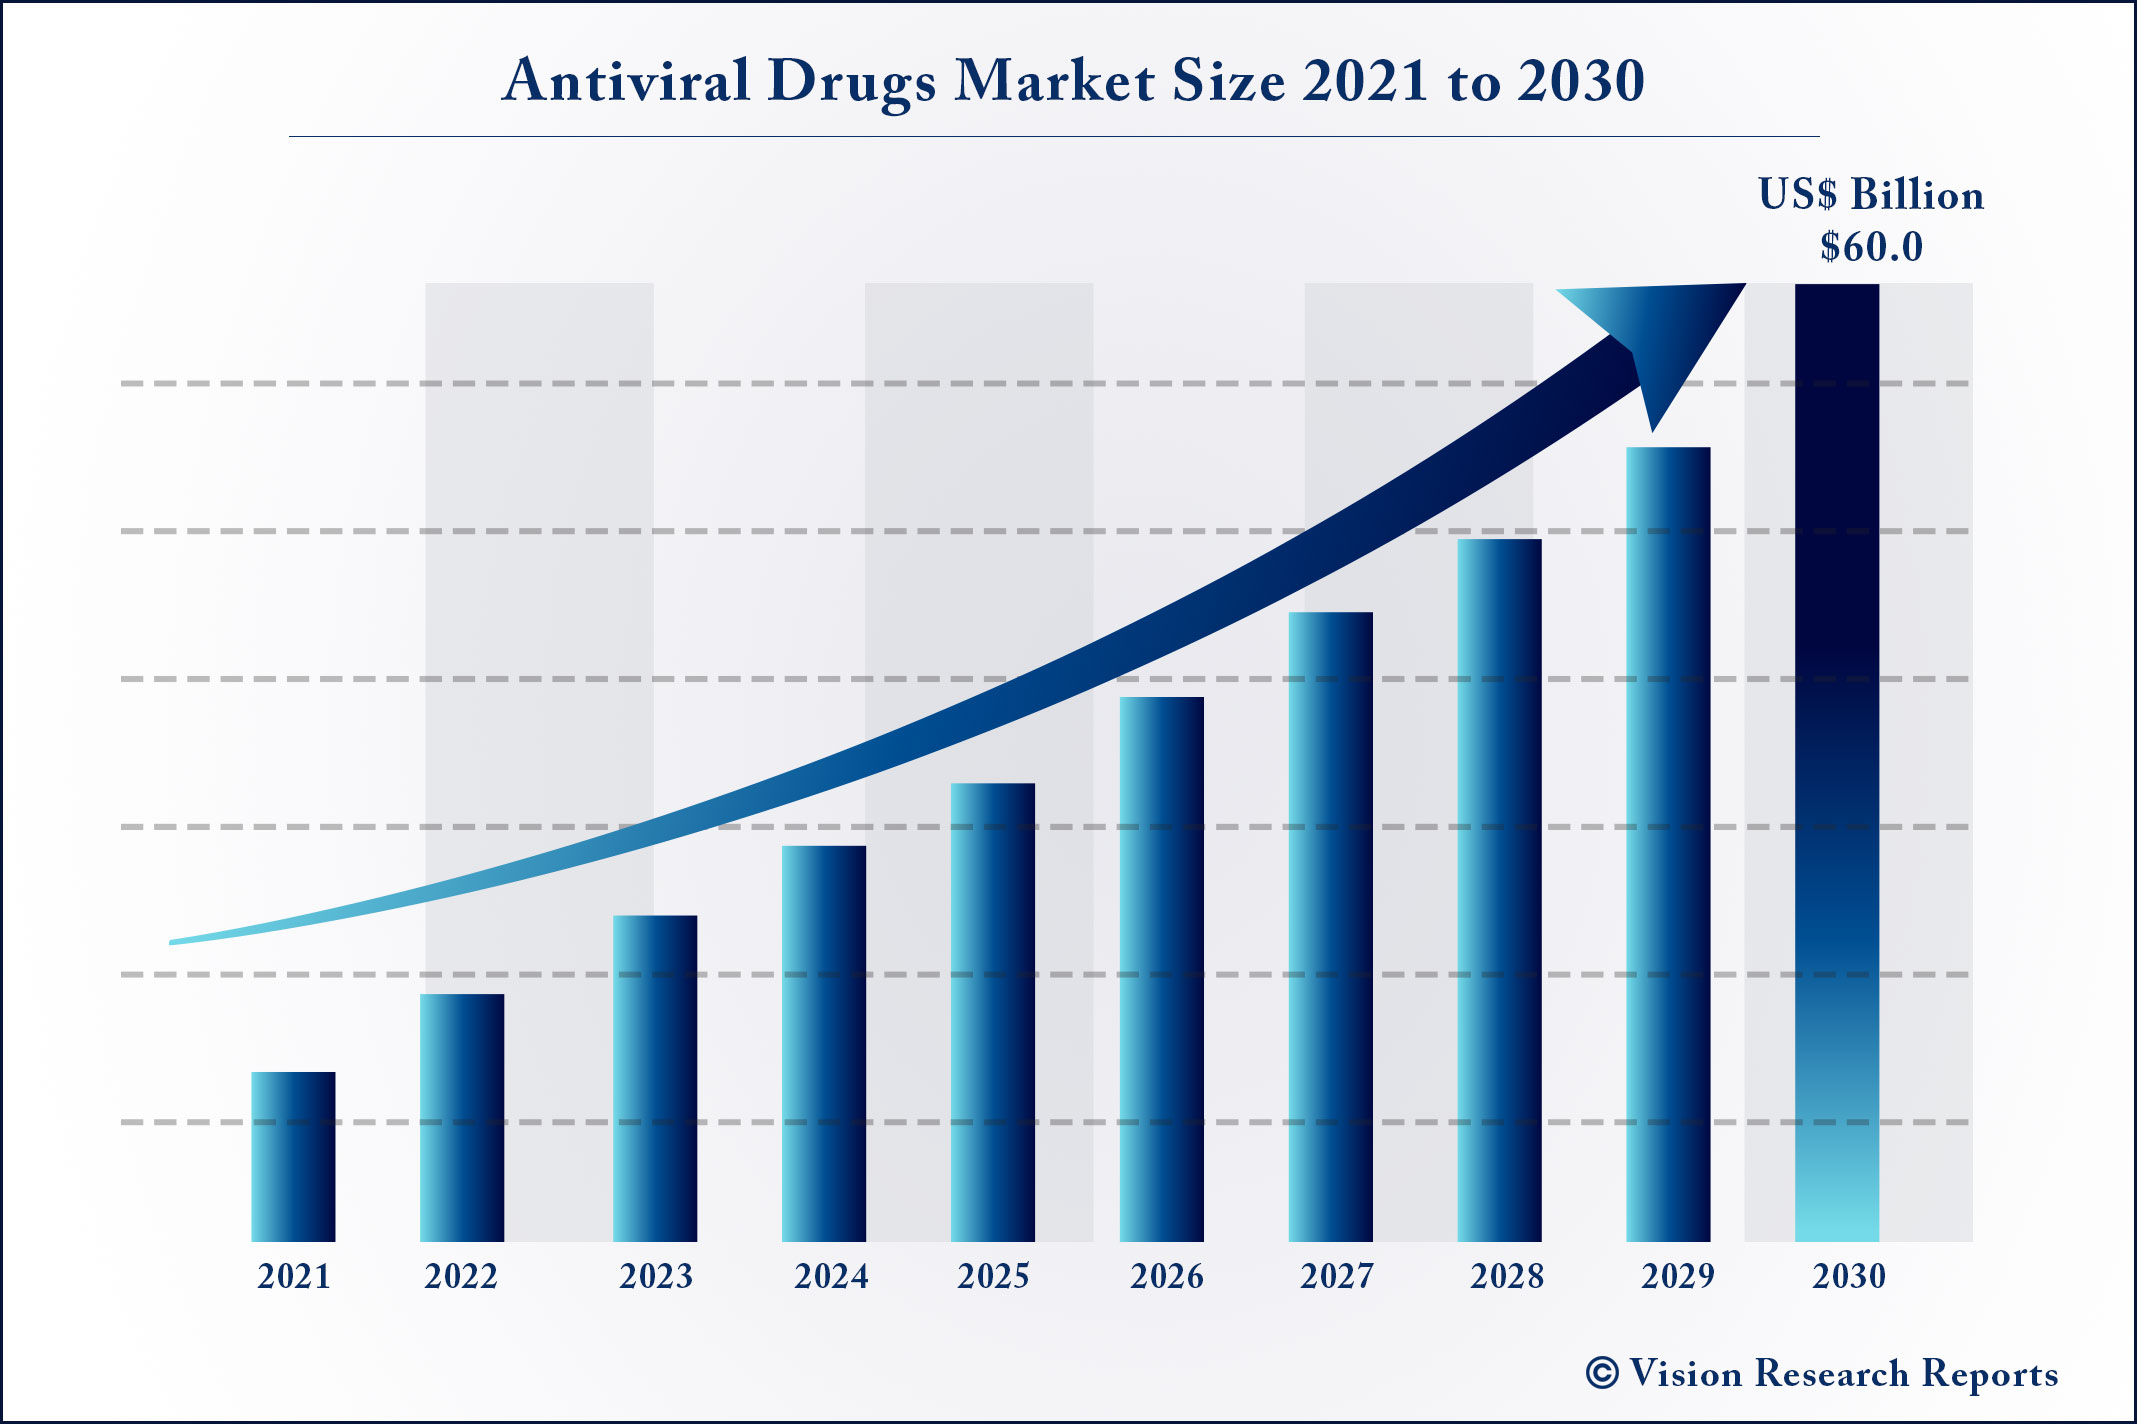 Antiviral Drugs Market Size 2021 to 2030